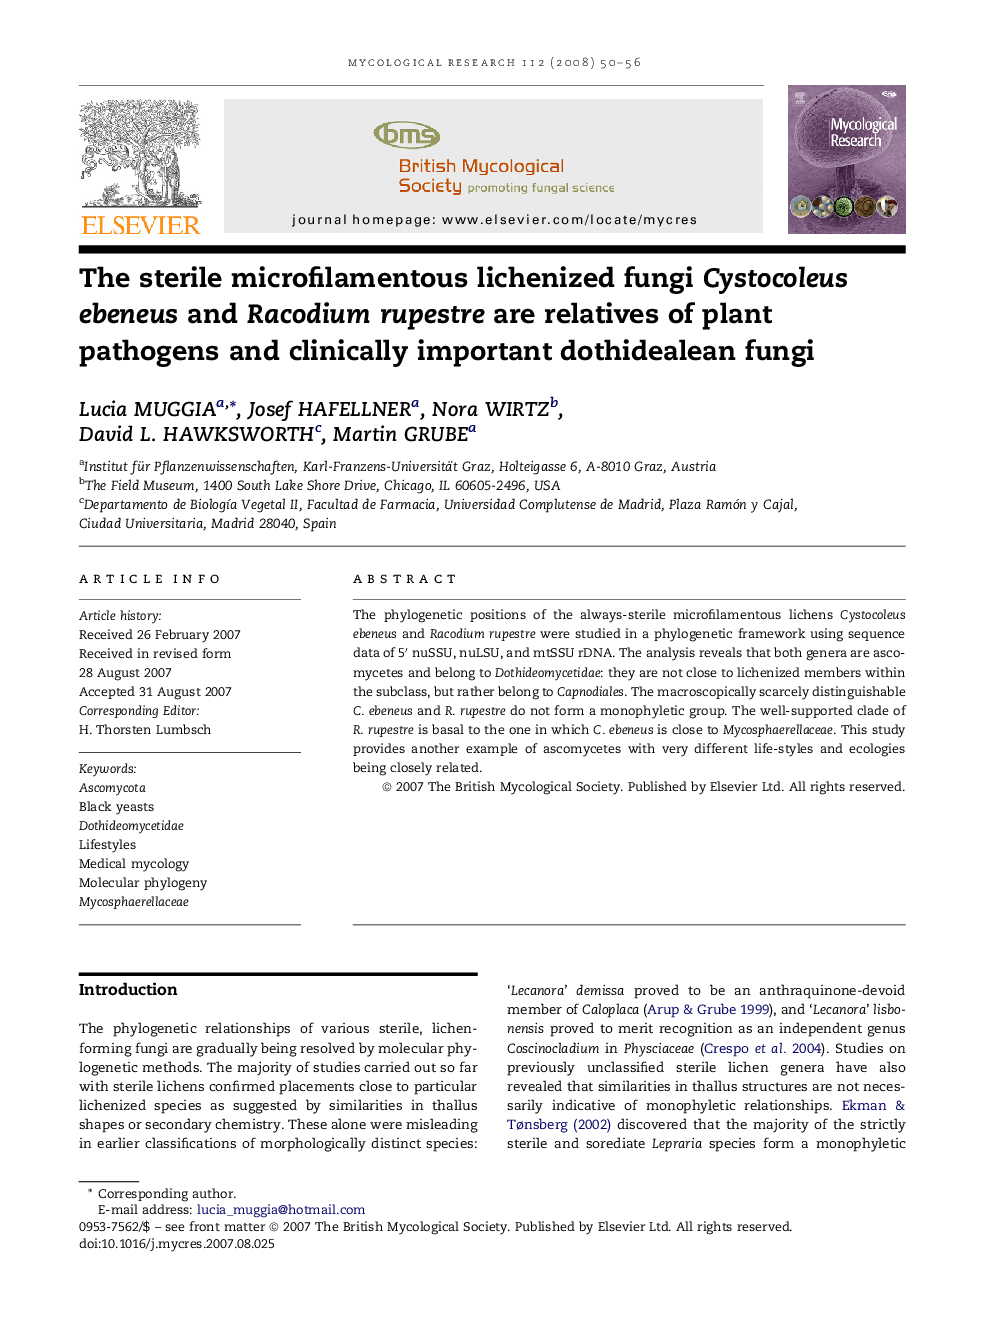 The sterile microfilamentous lichenized fungi Cystocoleus ebeneus and Racodium rupestre are relatives of plant pathogens and clinically important dothidealean fungi